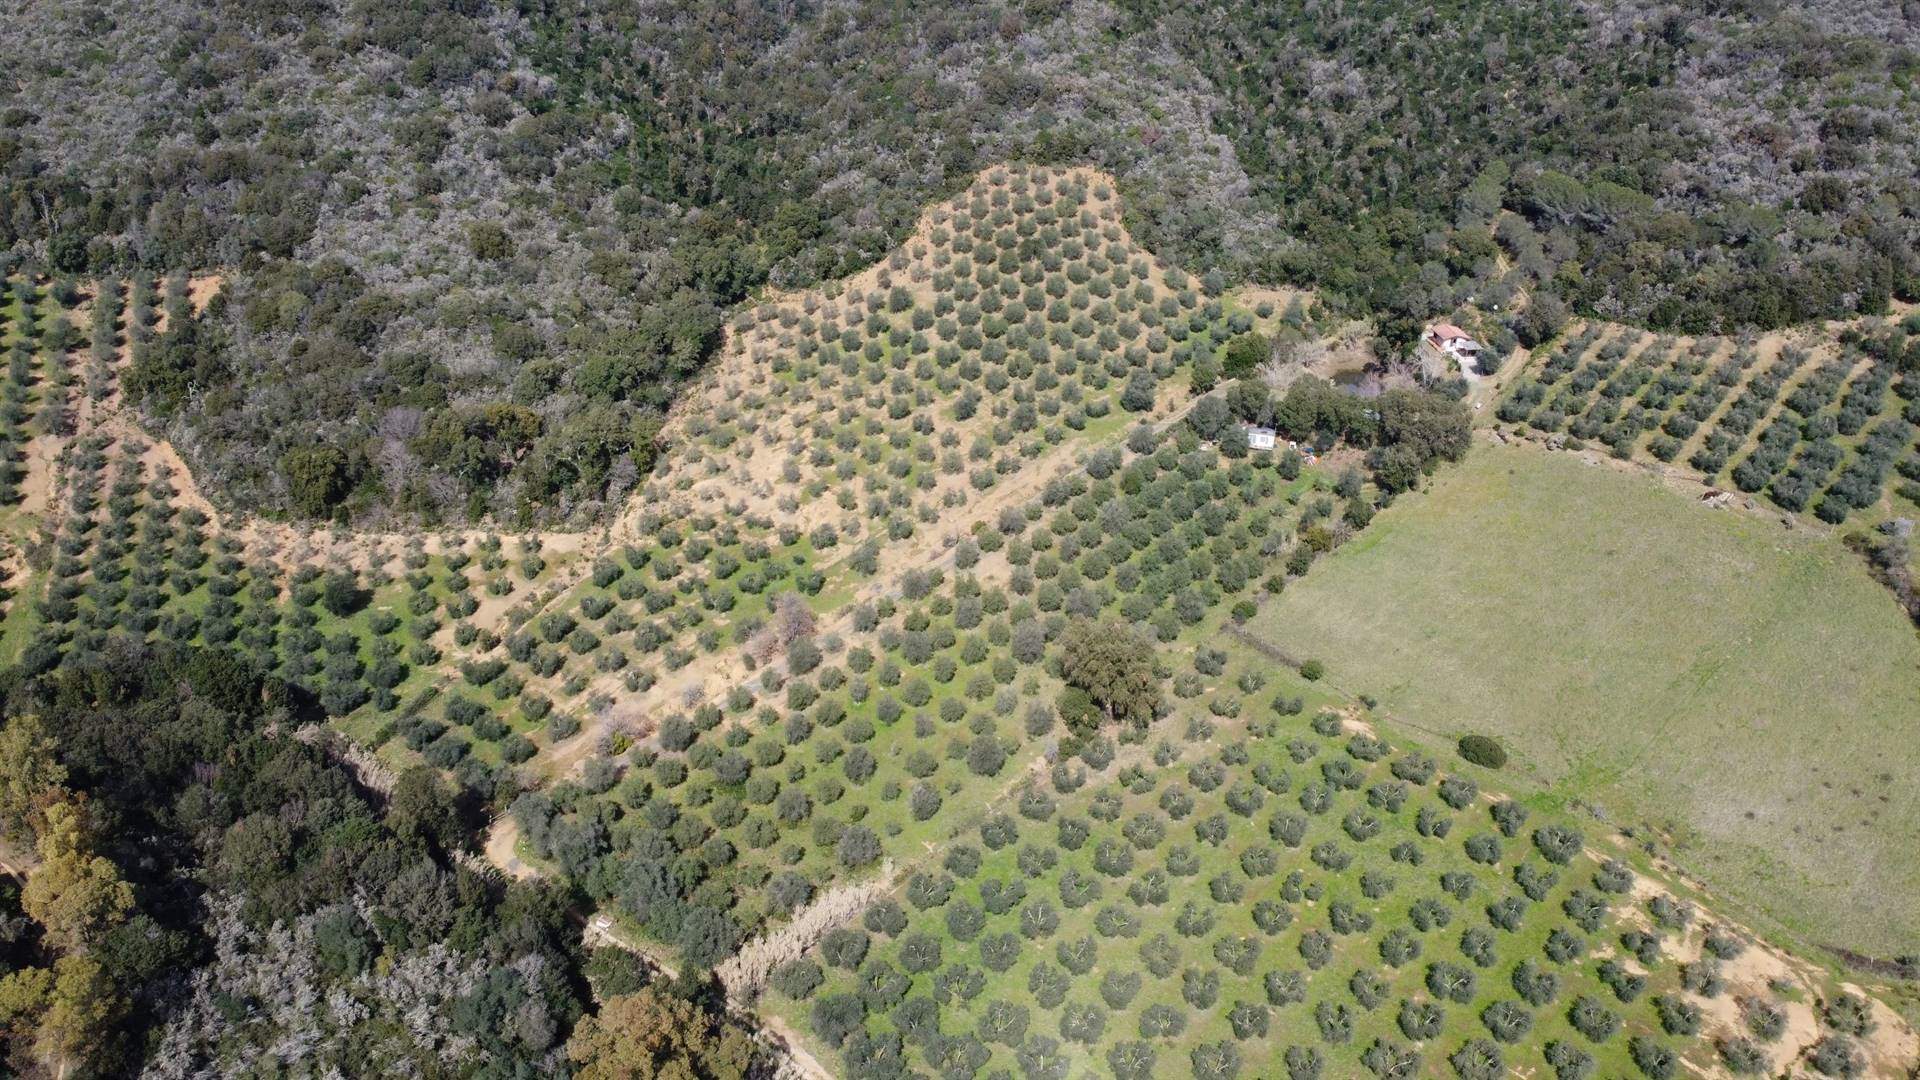 Vista aerea uliveto - Olive grove aerial view